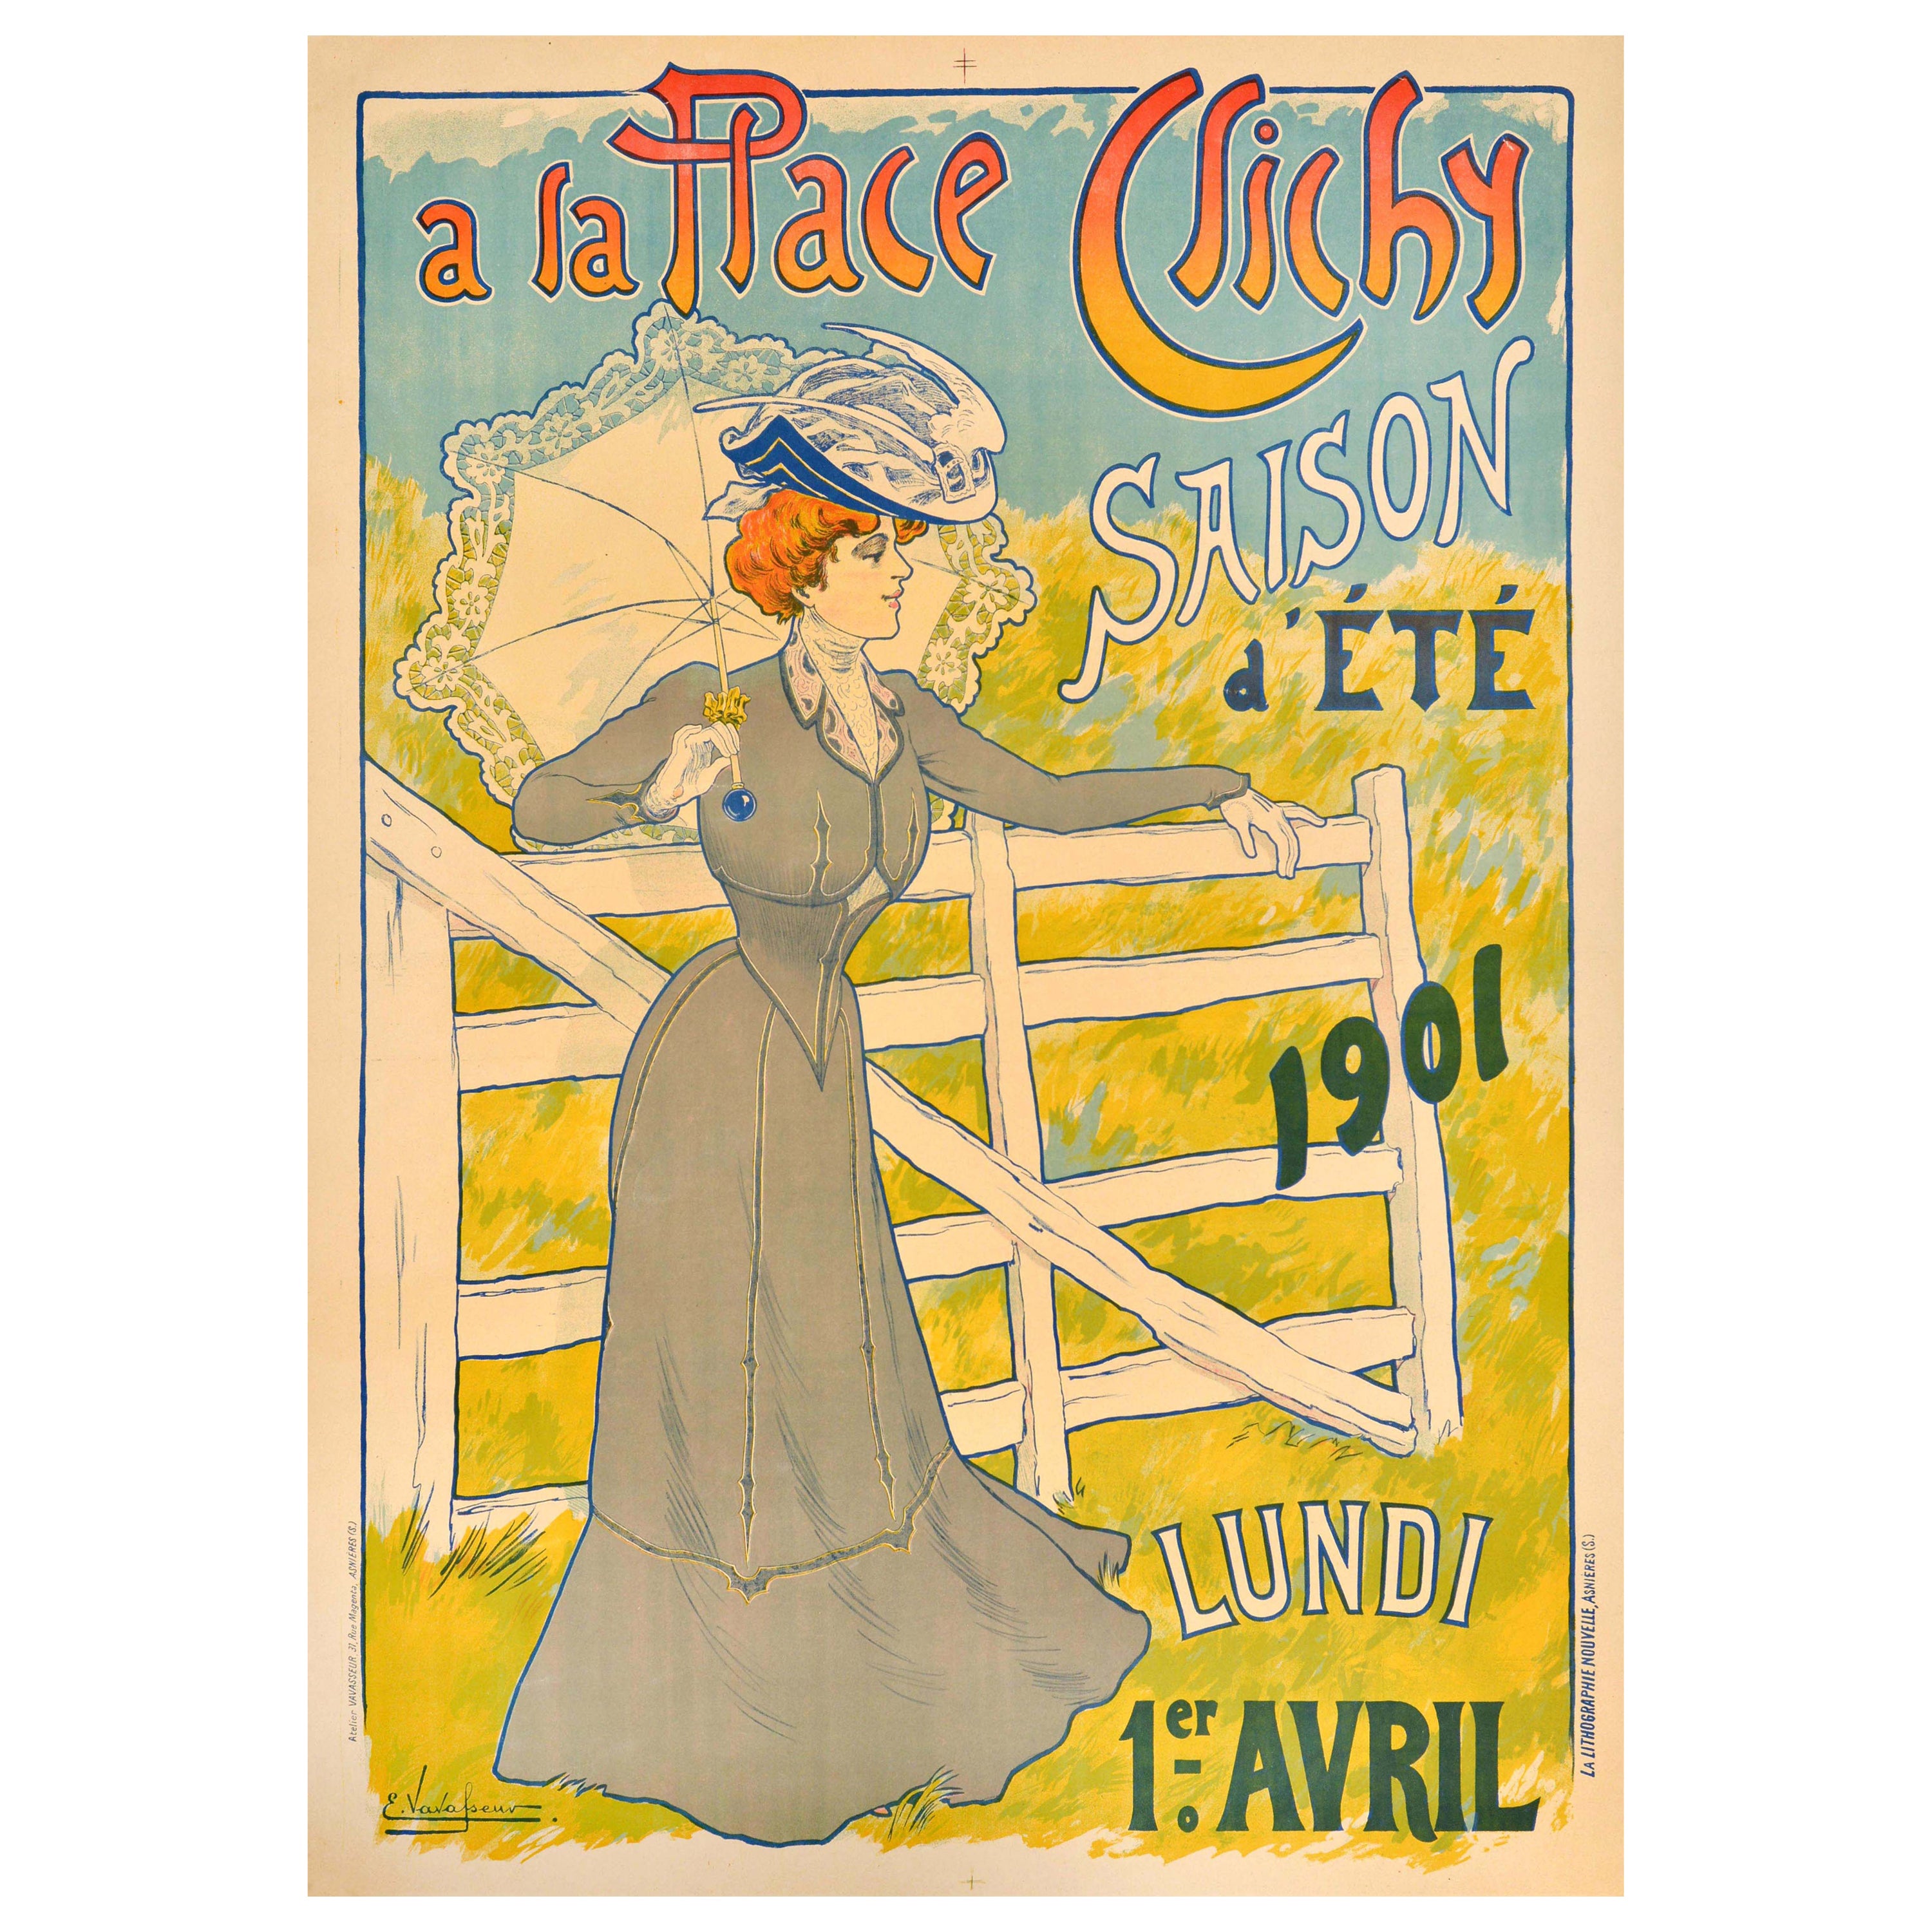 Original Antique Advertising Poster A La Place Clichy Sumer Season Fashion Paris For Sale